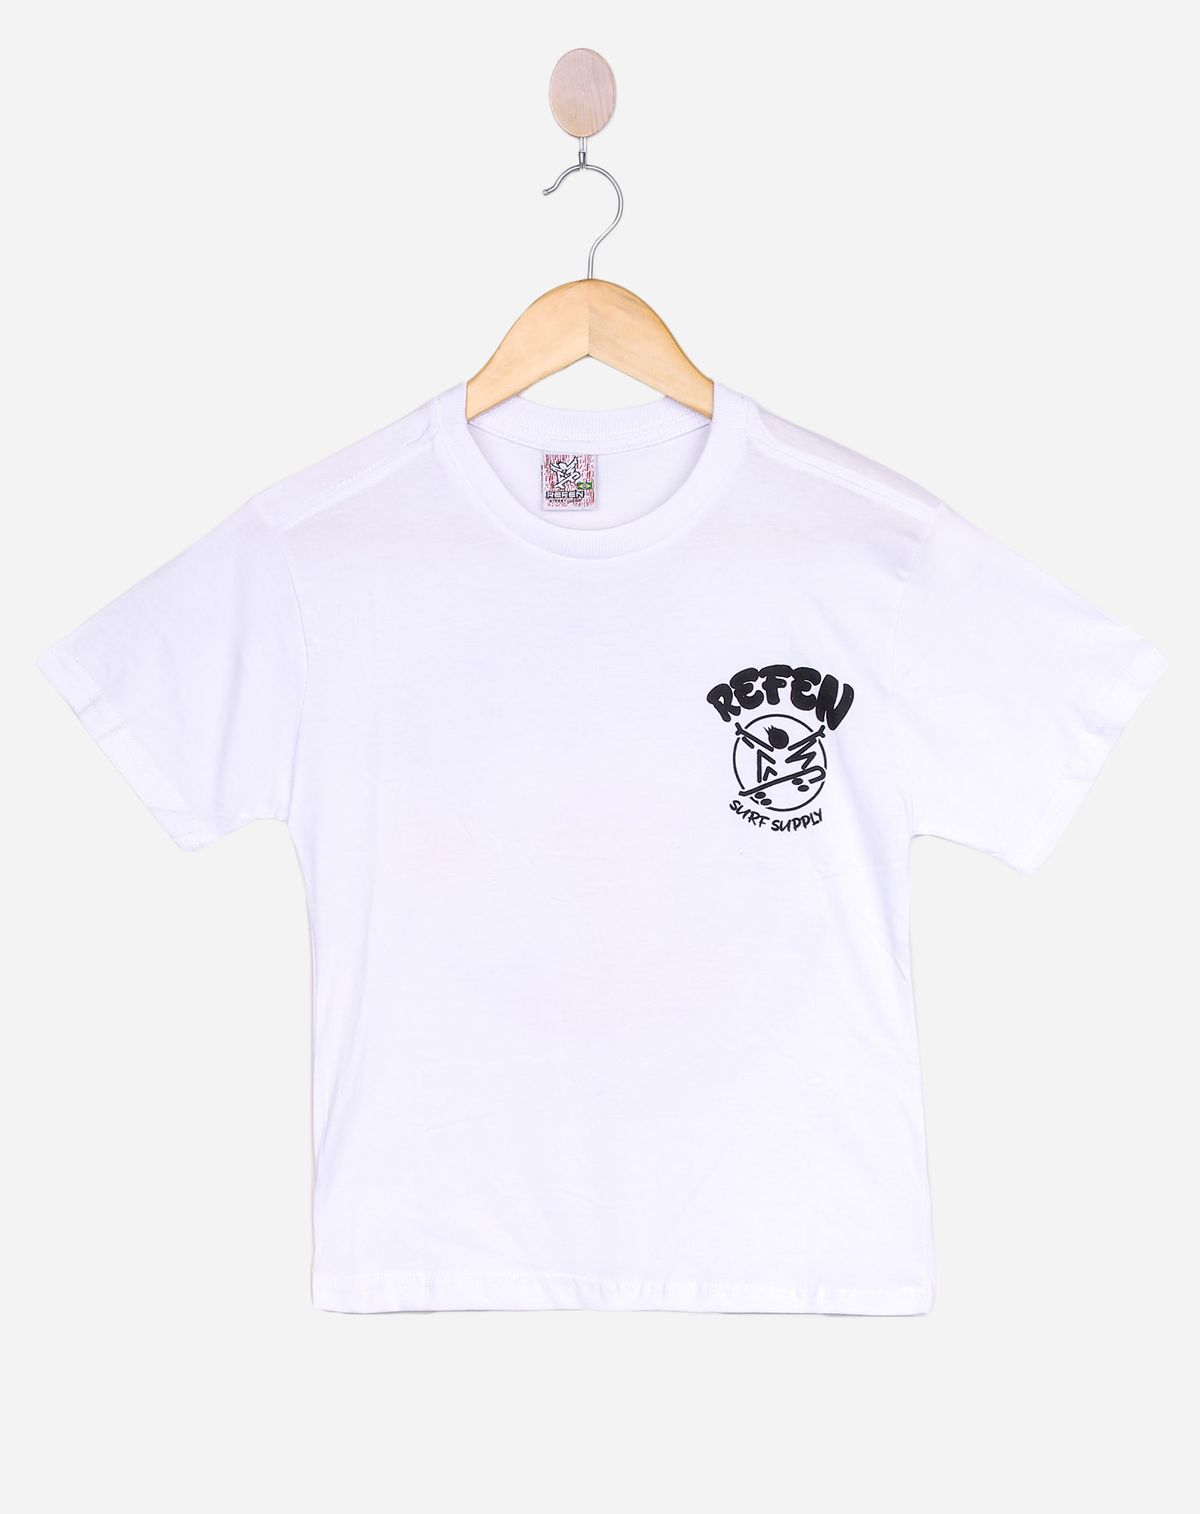 664885002-camiseta-manga-curta-juvenil-menino-estampa-surf-branco-12-6c2